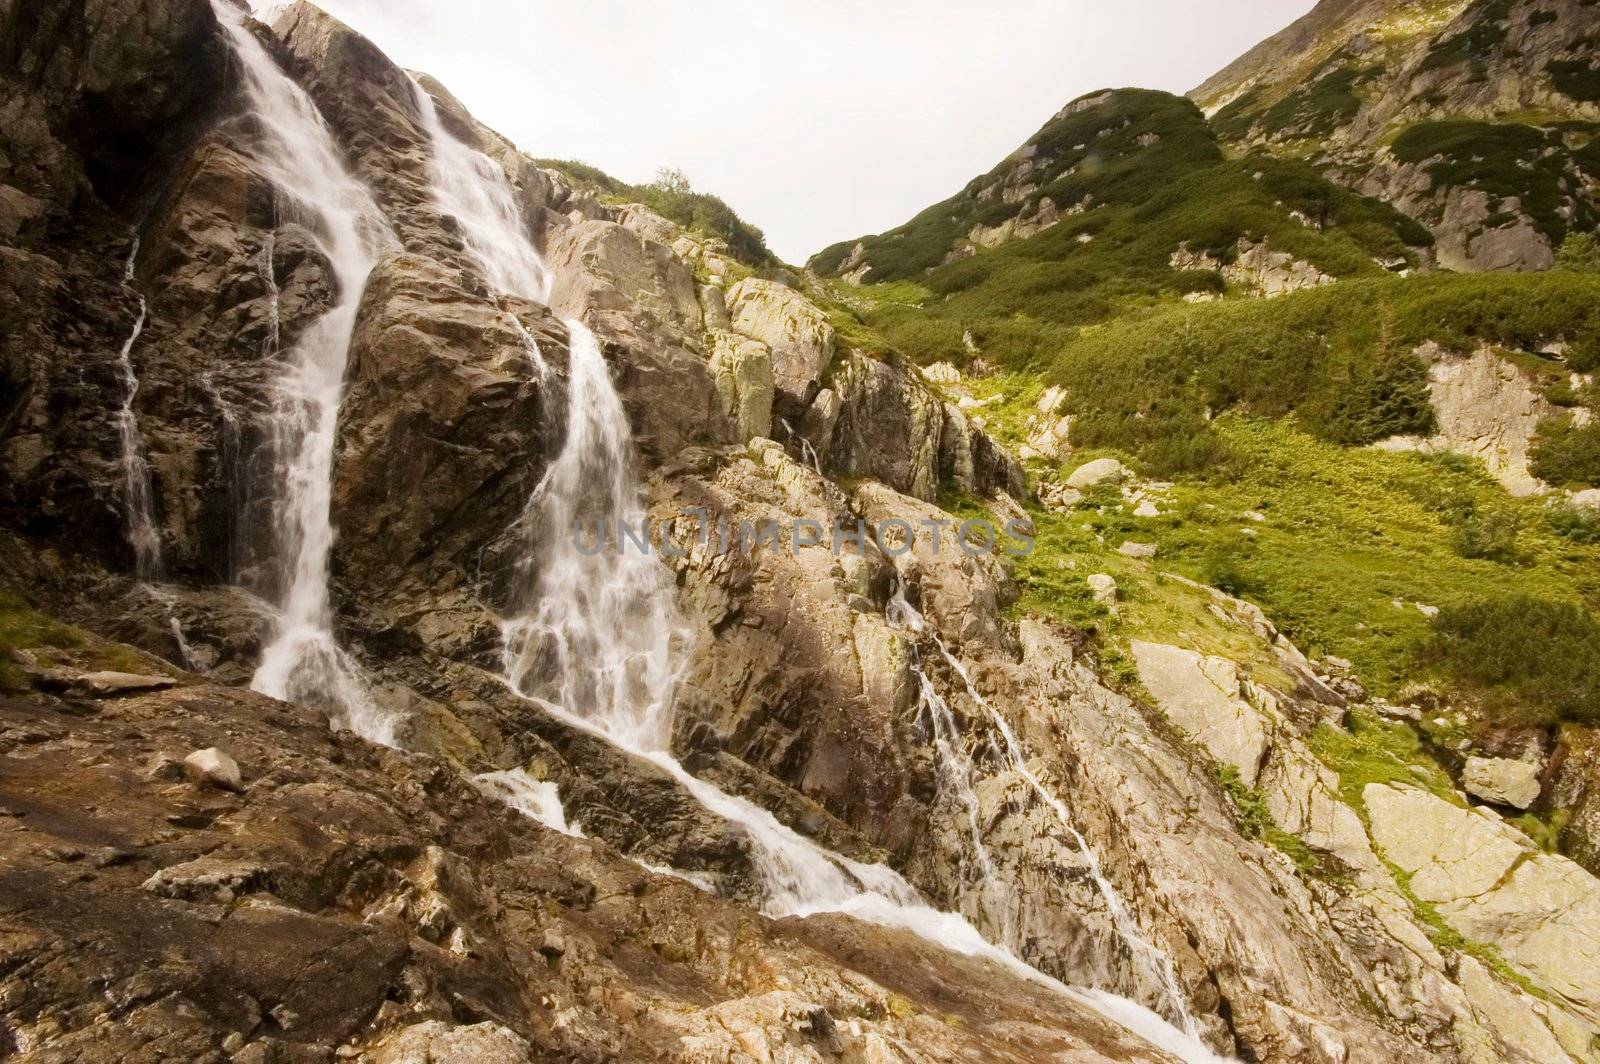 Mountain waterfall in Polish Tatra region